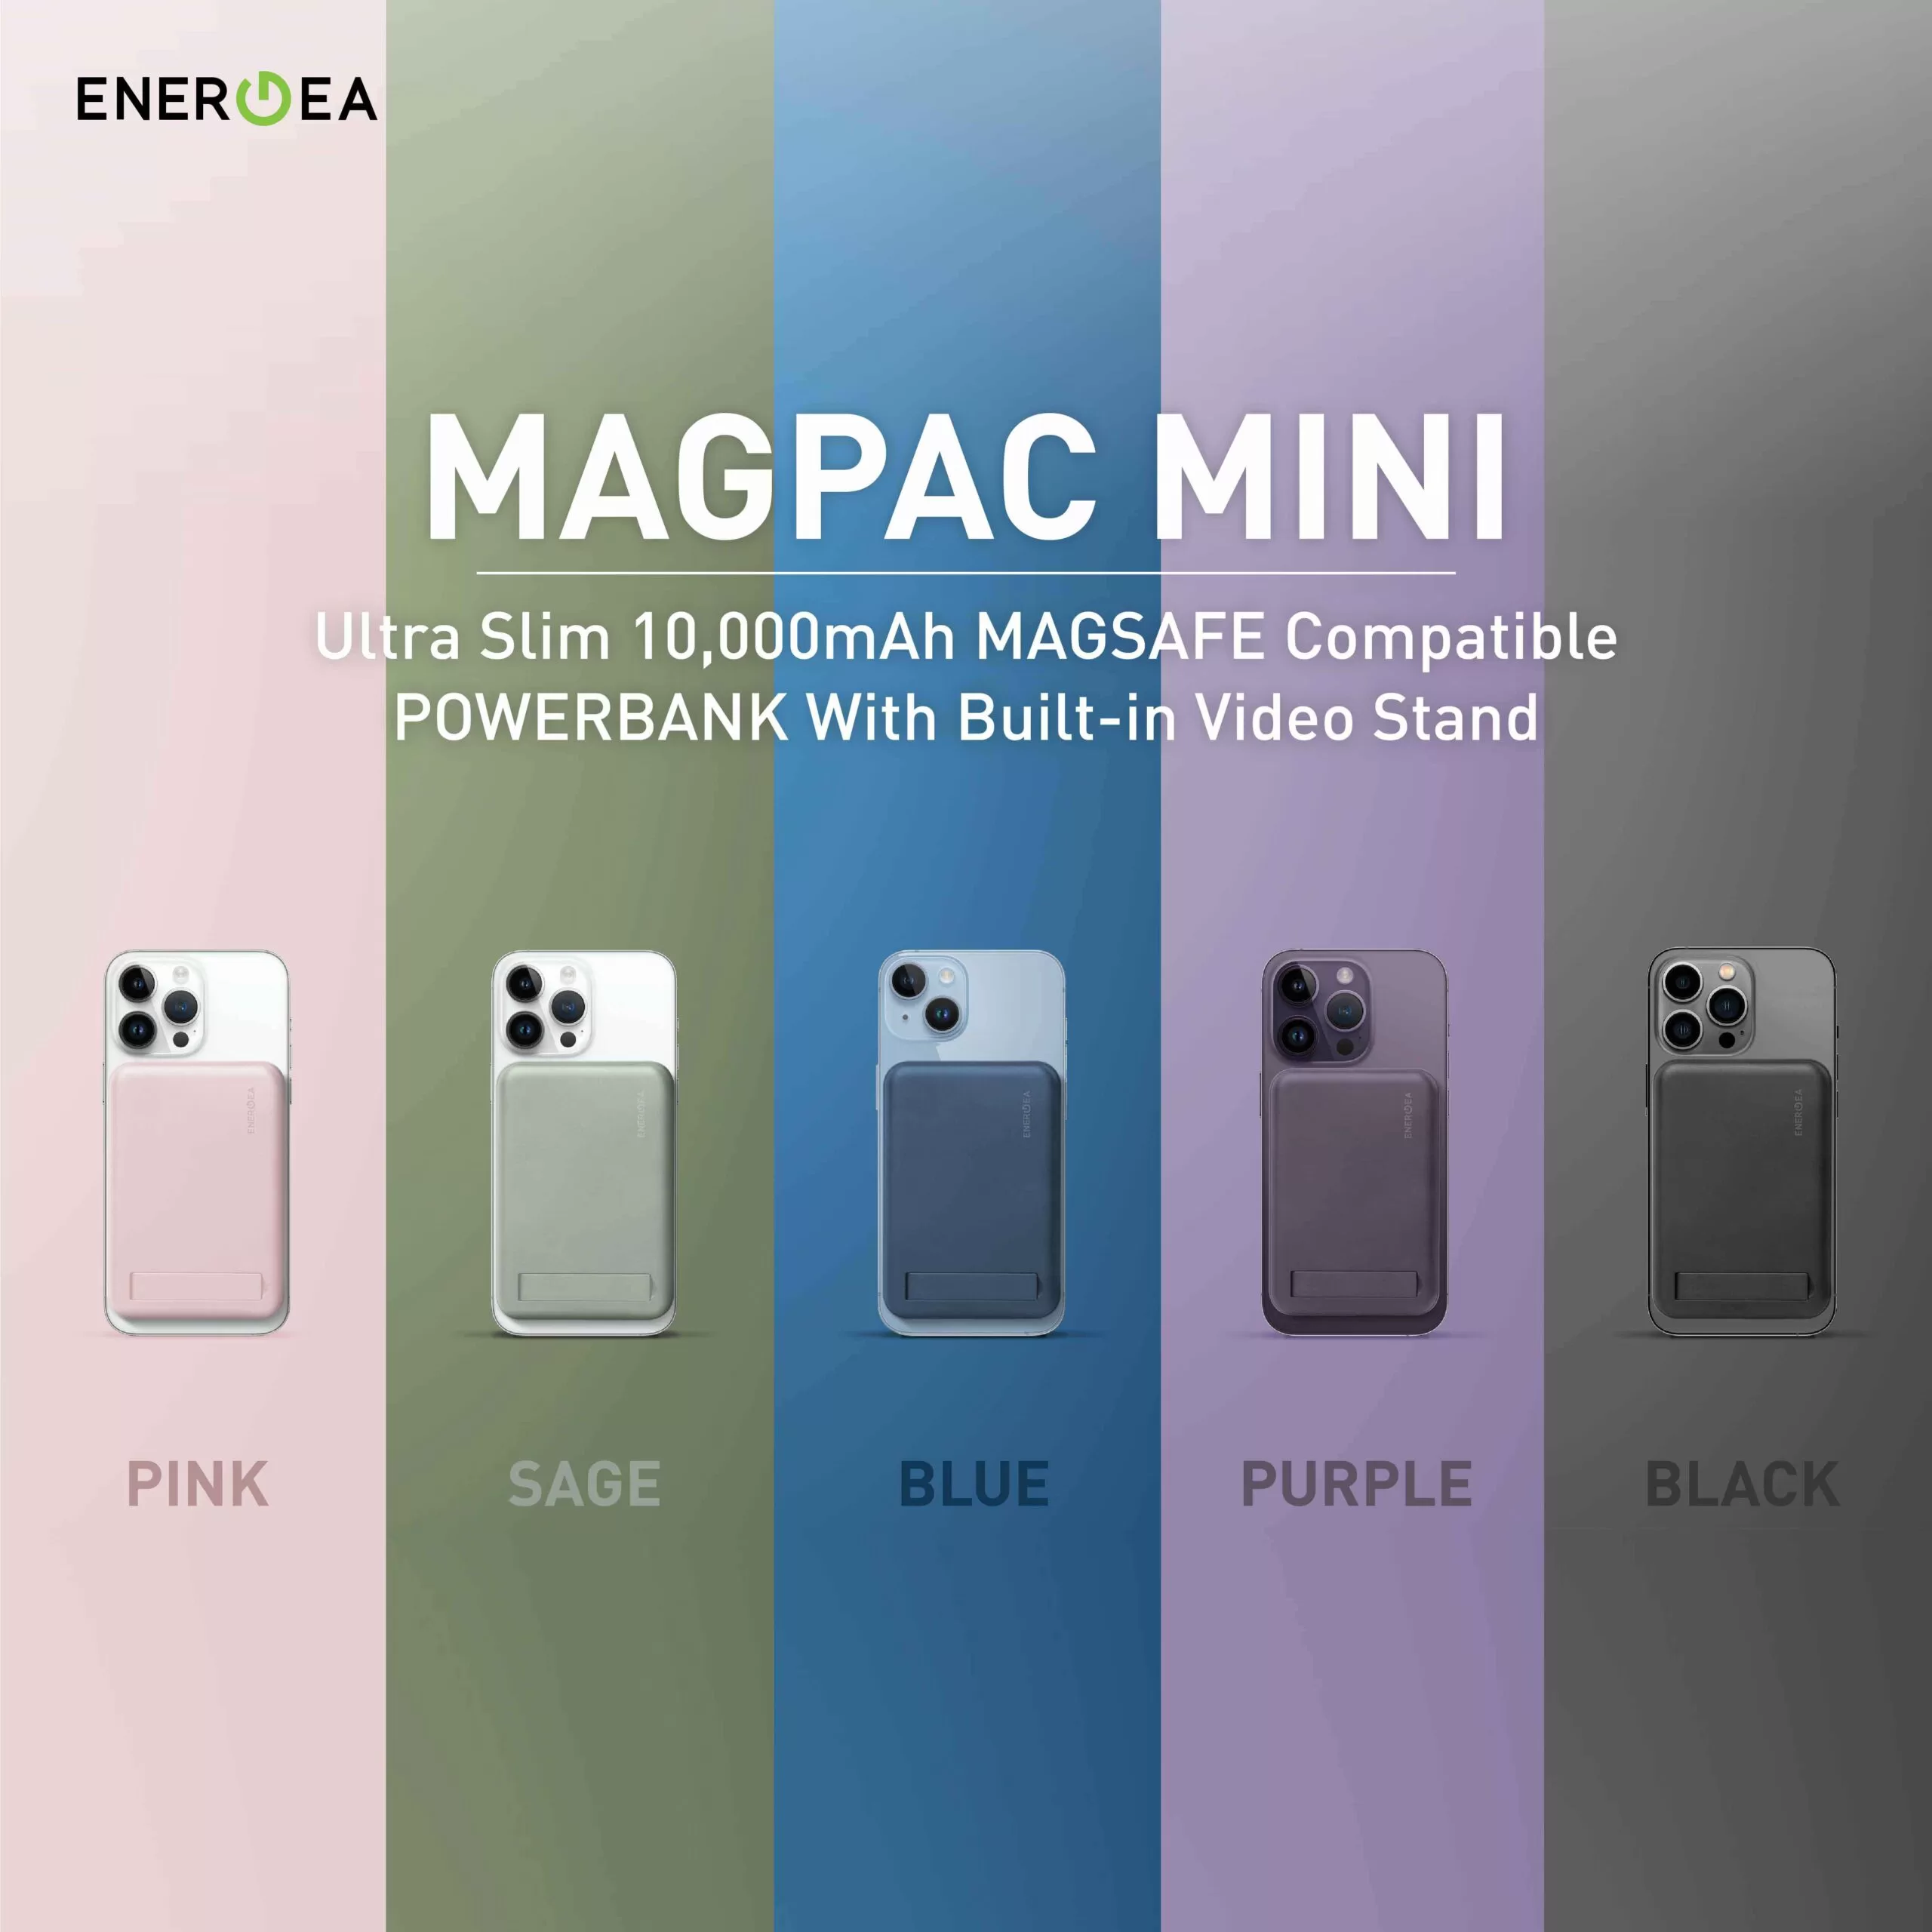 Pic Magpac Mini 02 scaled | ComPac Mini 2 | อาร์ทีบีฯ ส่งแบตเตอรี่สำรอง 2 รุ่นใหม่ Energea ComPac Mini 2 และ MagPac Mini กะทัดรัด พลังชาร์จเร็วเต็มพิกัด